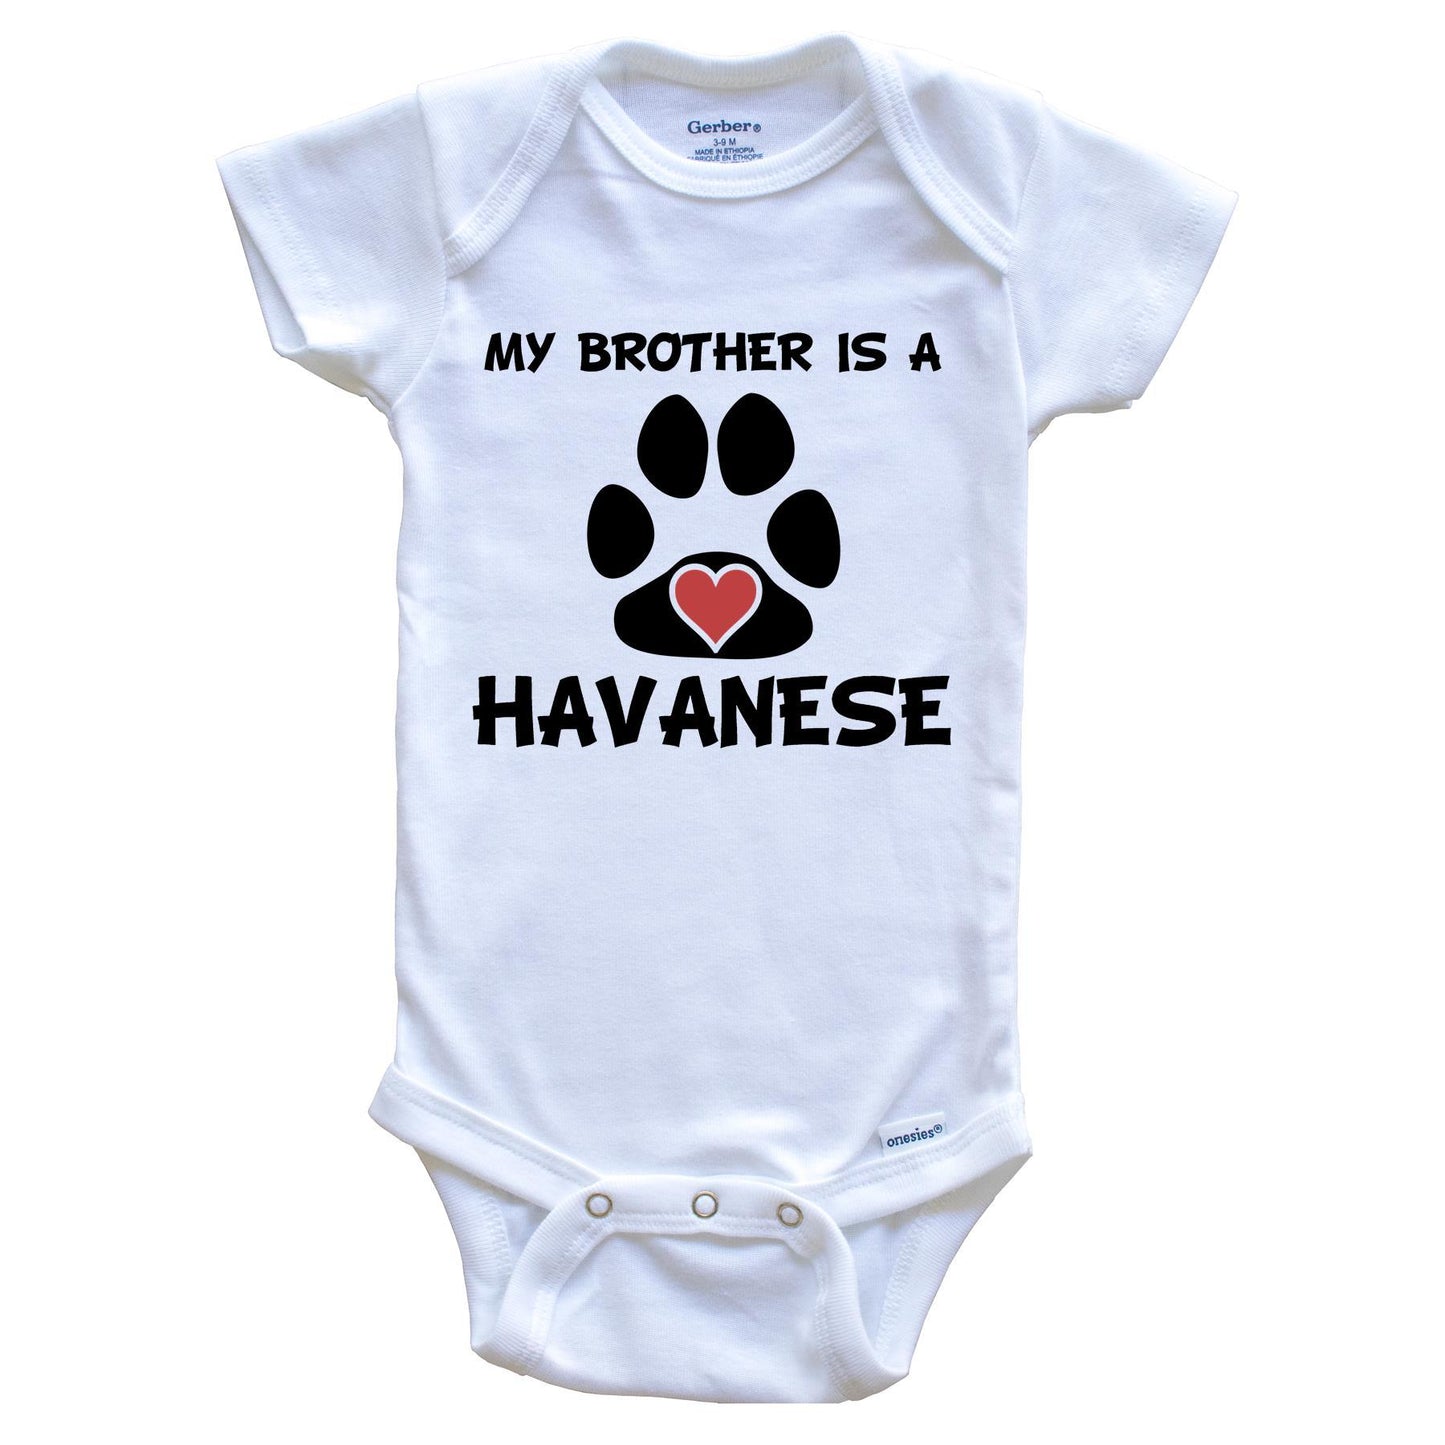 My Brother Is A Havanese Baby Onesie